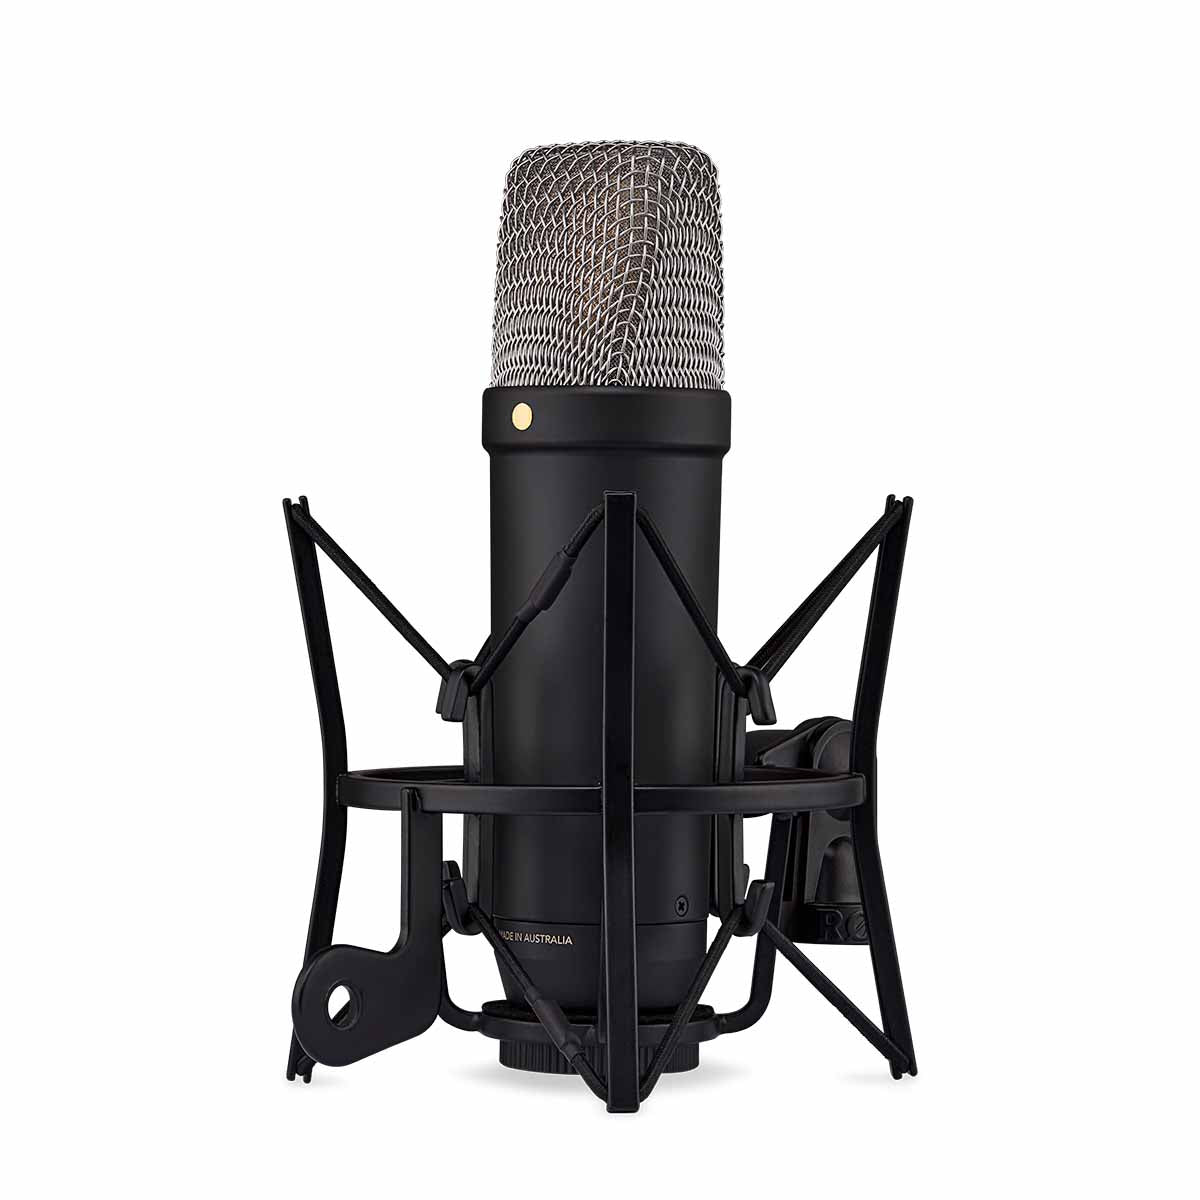 Rode NT1 5th Gen XLR & USB Microphone (Black)